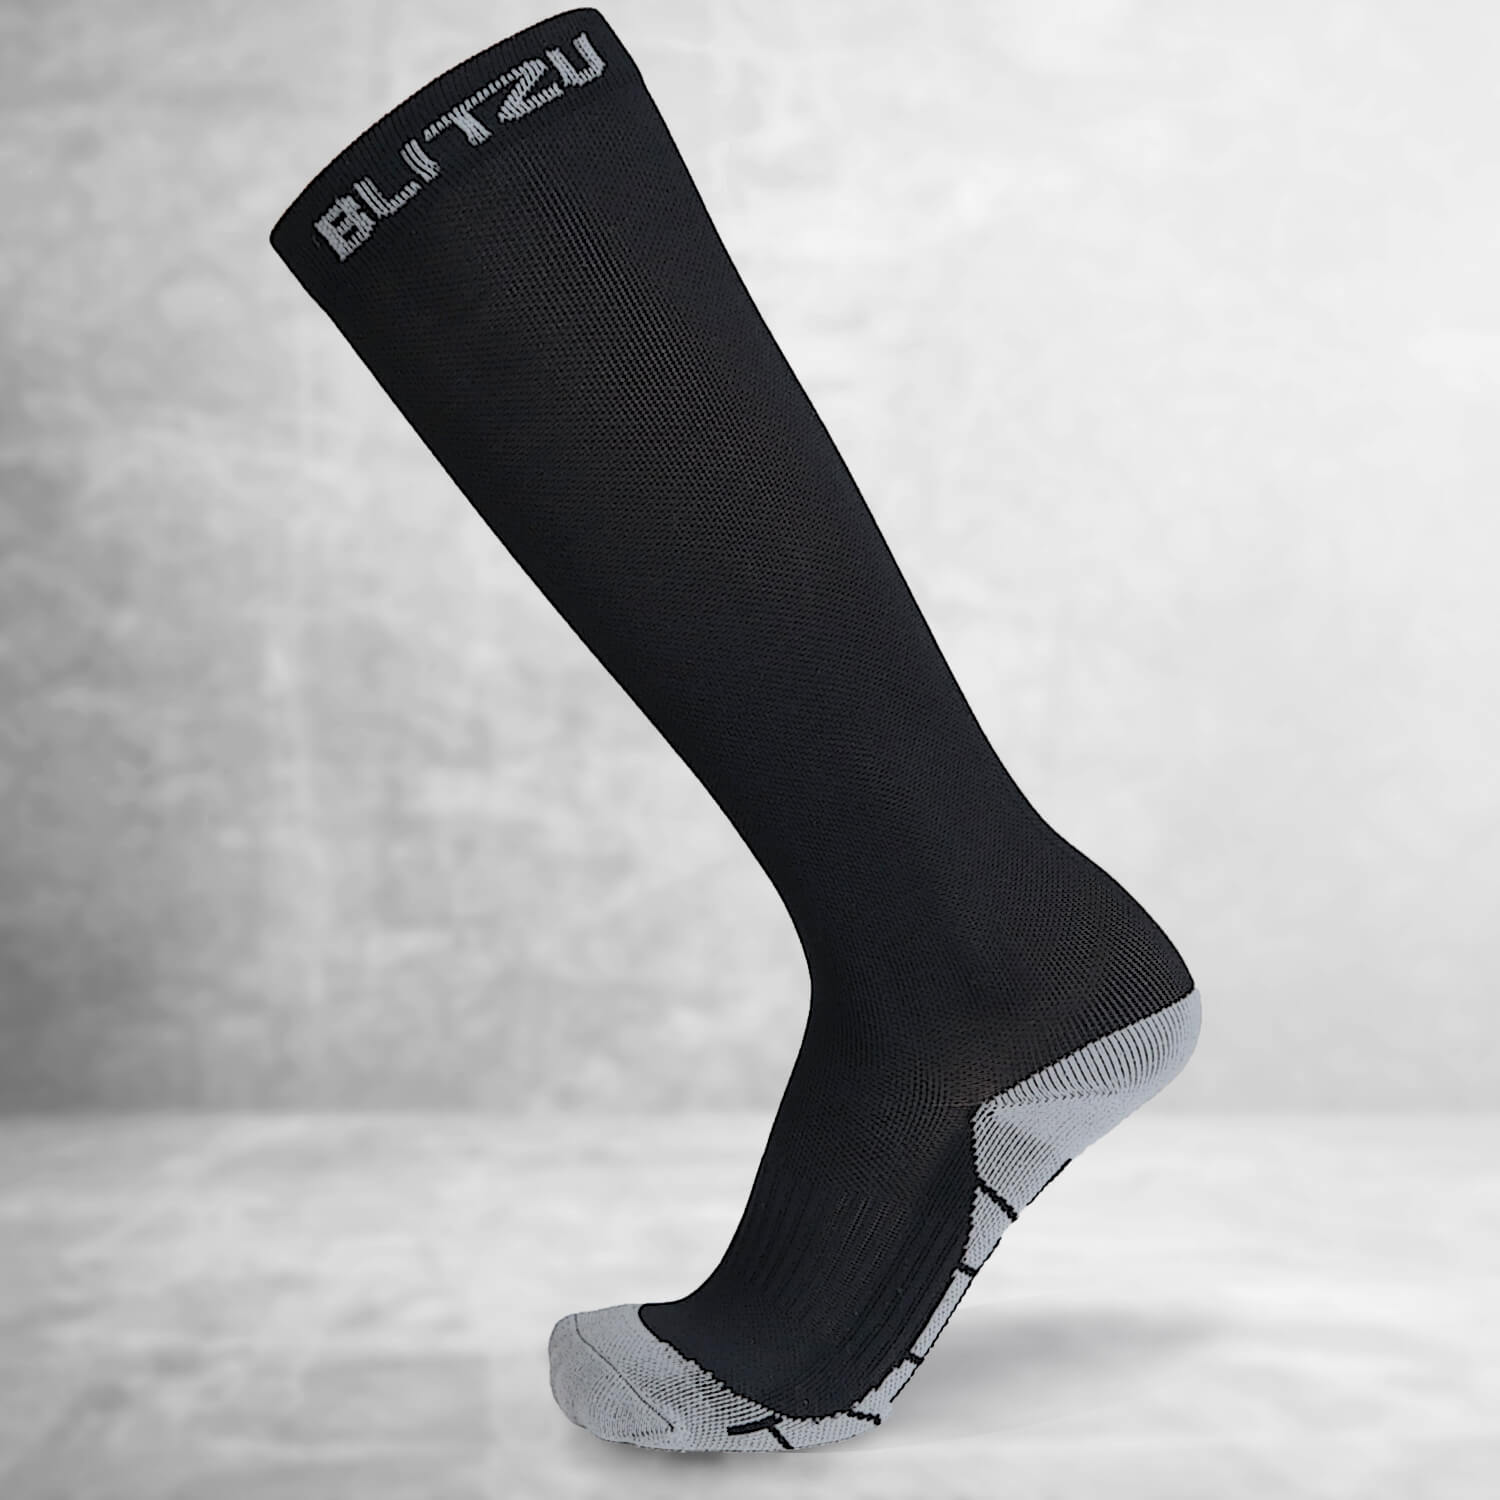 Stamina Compression Socks (20-30mmHg) for Men & Women Knee High Medical  Support Socks Best for Edema,Varicose Veins